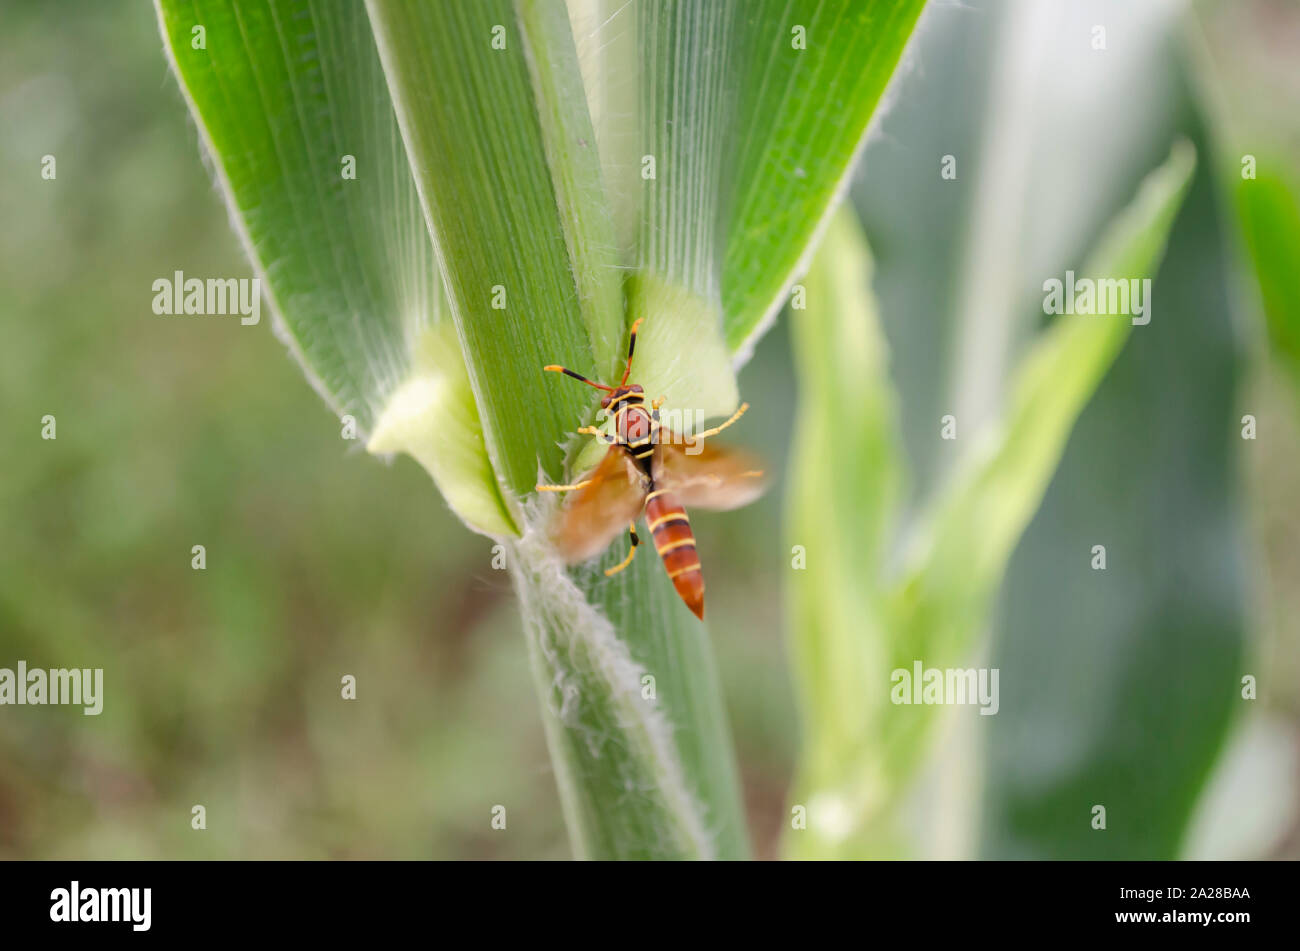 Wasp Landing On Corn Leaf Stock Photo